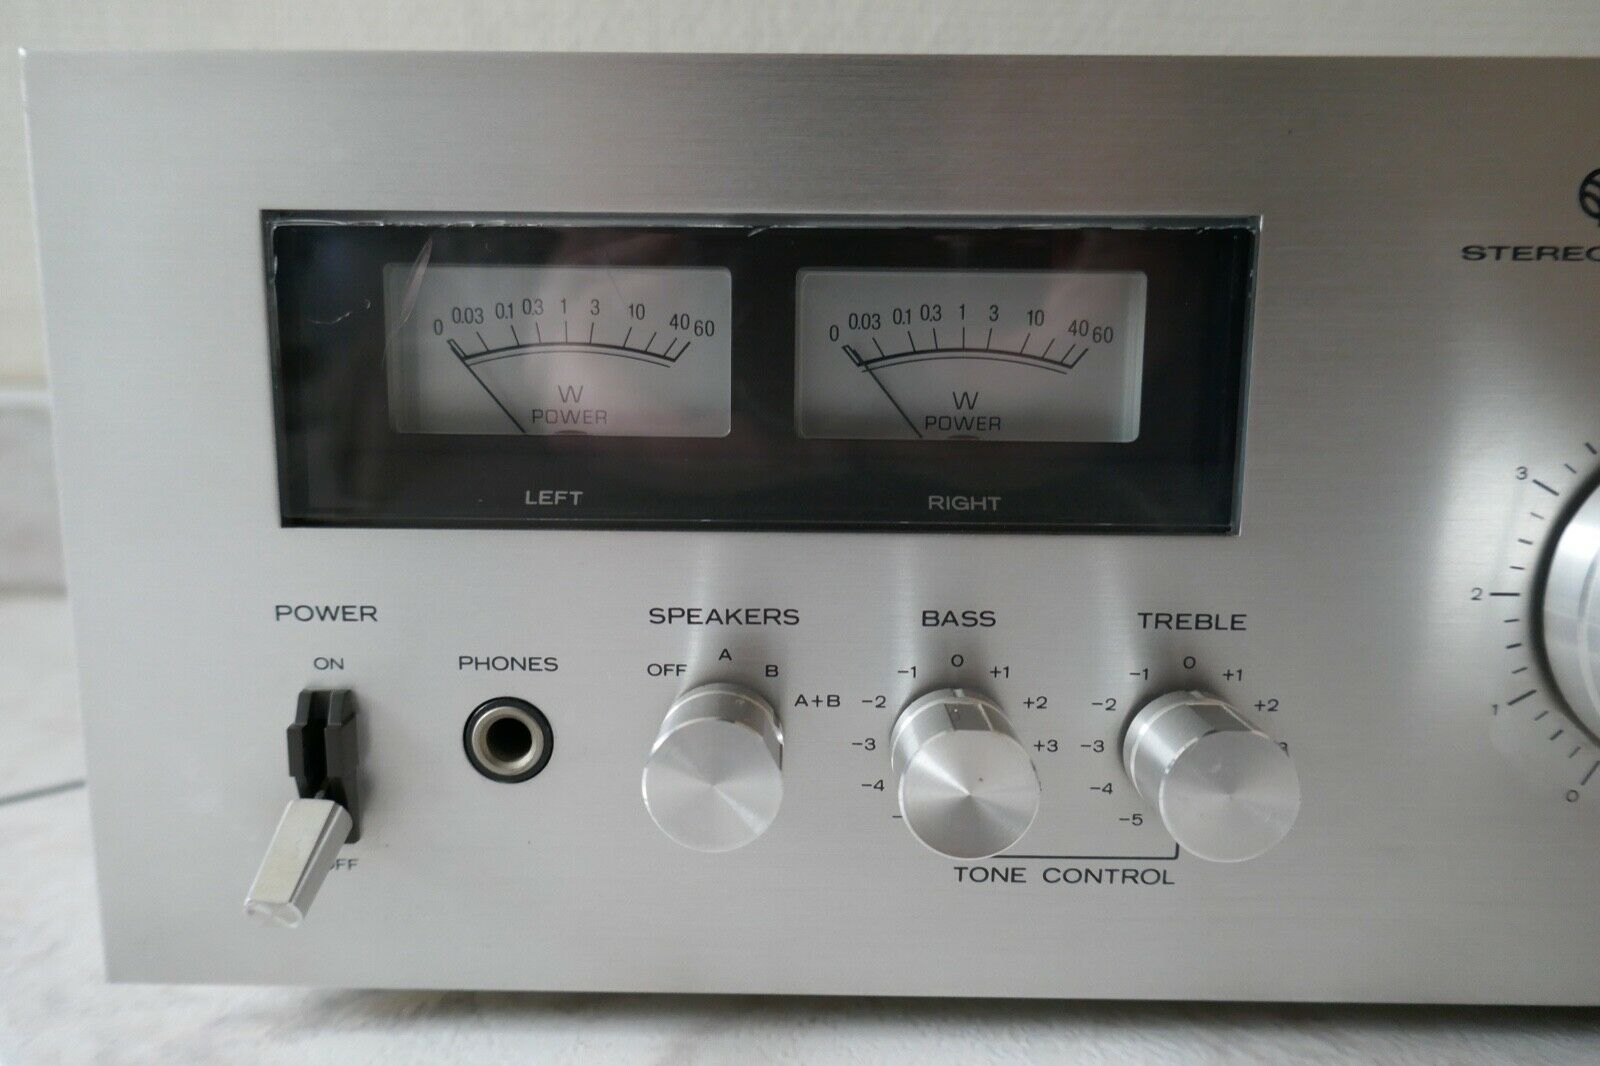 amplificateur amplifier kenwood KA-5700 vintage occasion